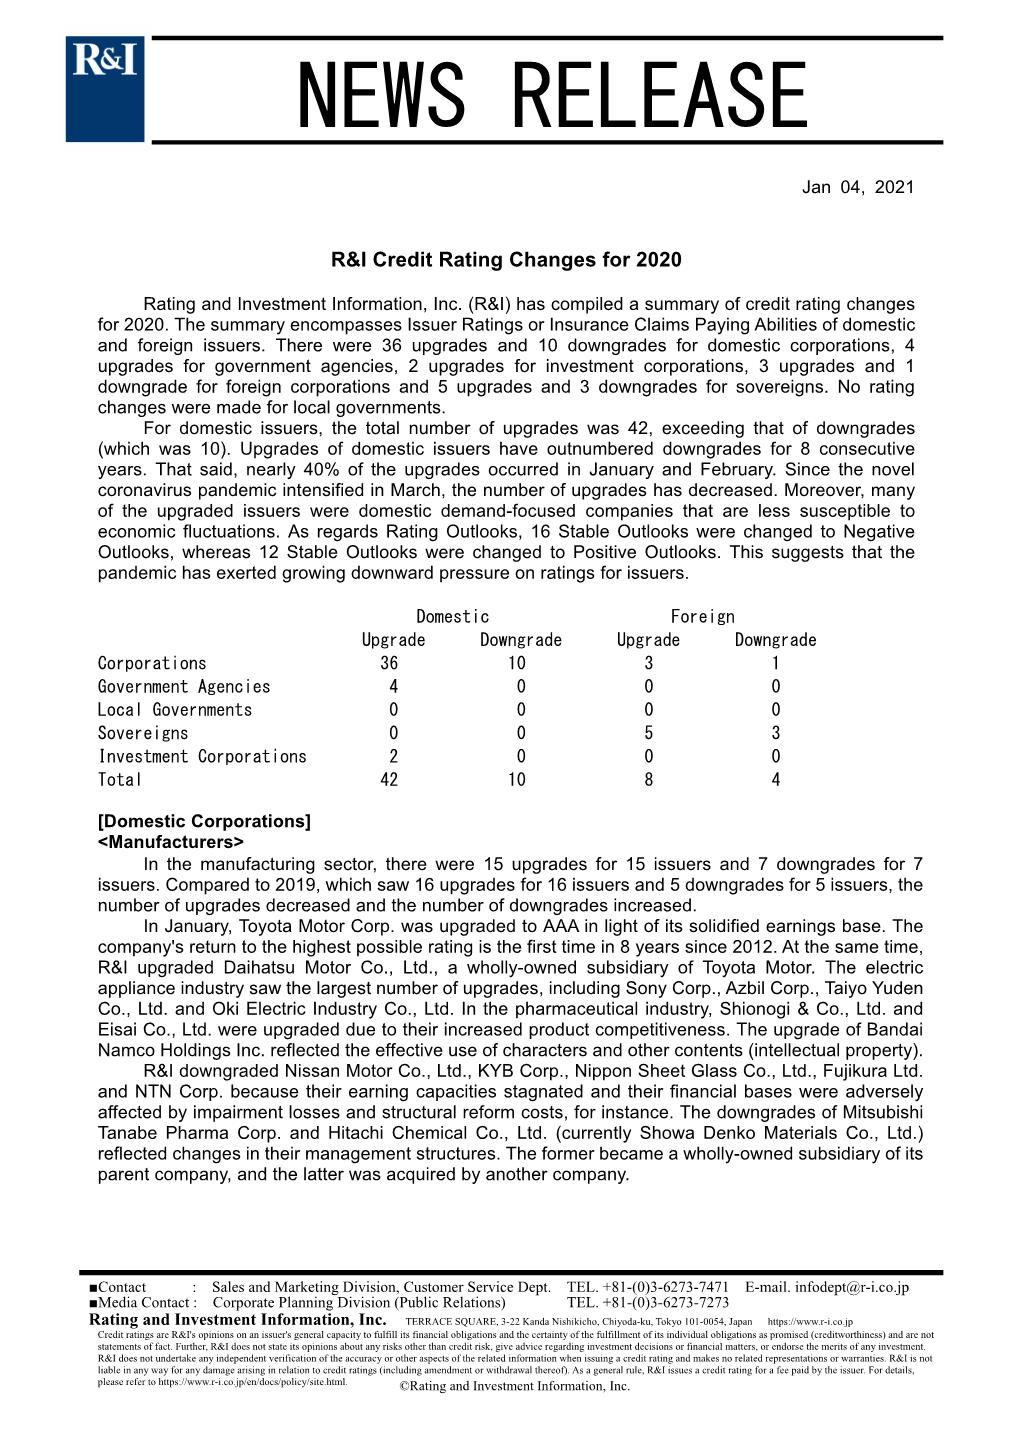 R&I Credit Rating Changes for 2020